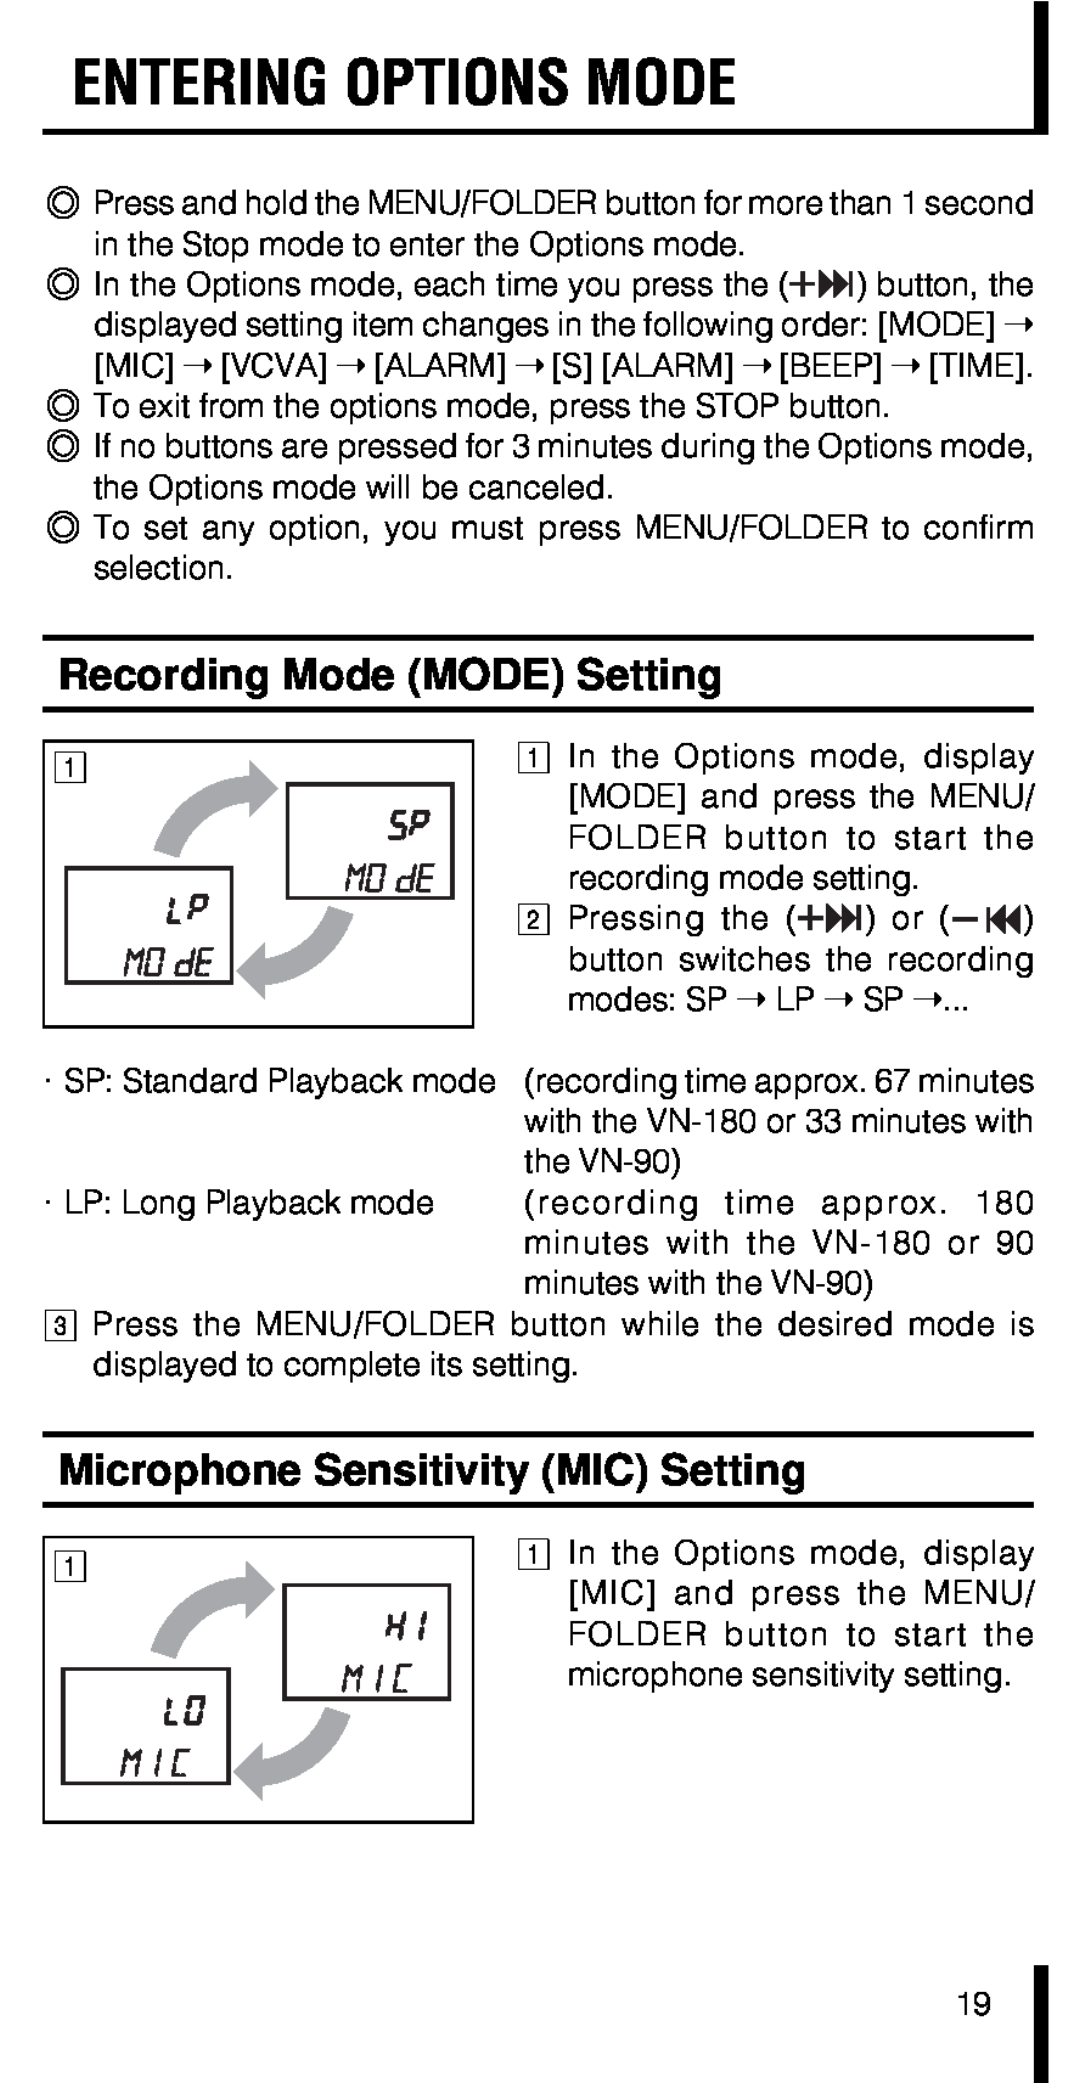 Olympus VN-180 manual Entering Options Mode, Recording Mode MODE Setting, Microphone Sensitivity MIC Setting 